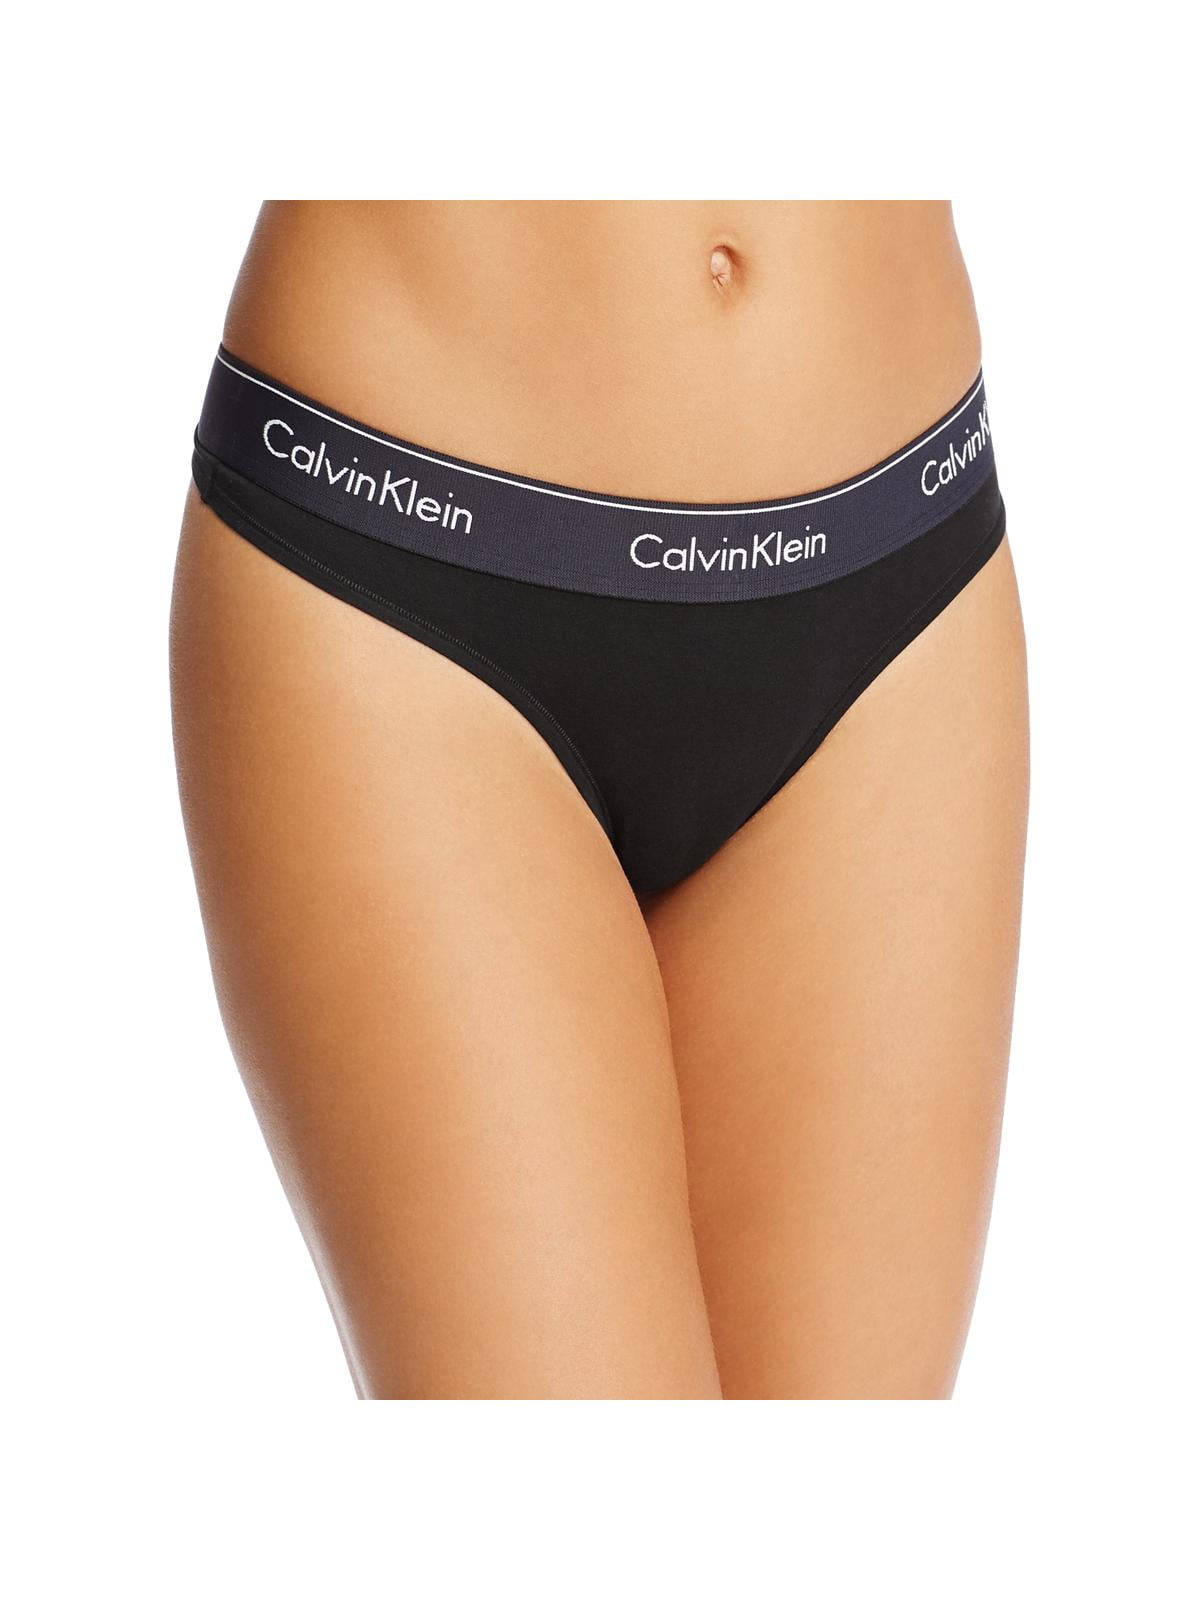 Calvin Klein Underwear Women's Radiant Cotton Thong, Elysian Green